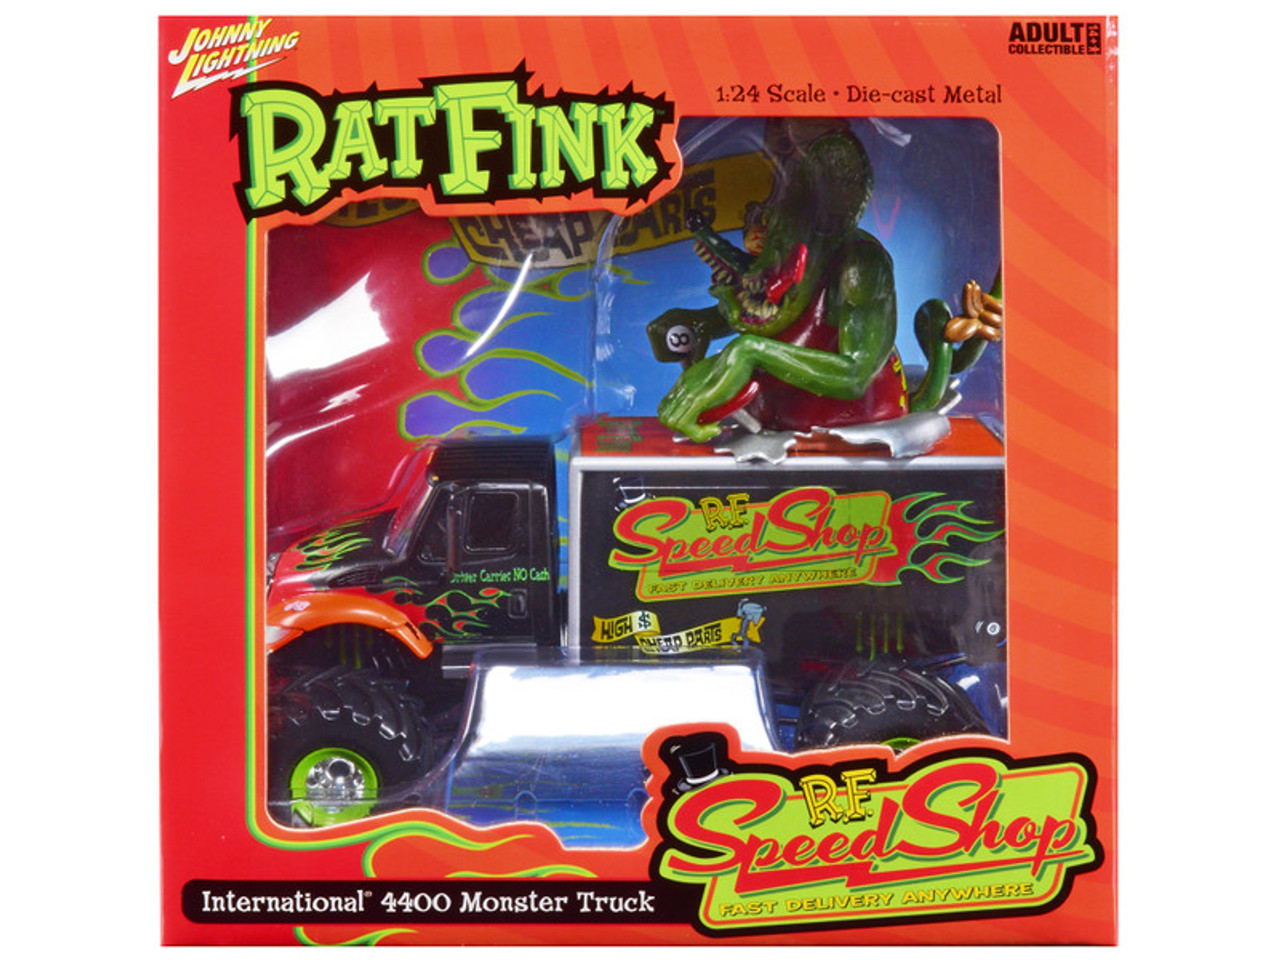 International 4400 Monster Truck Matt Black with Flames and Rat Fink Figure Attached "Rat Fink Speed Shop" 1/24 Diecast Model by Johnny Lightning